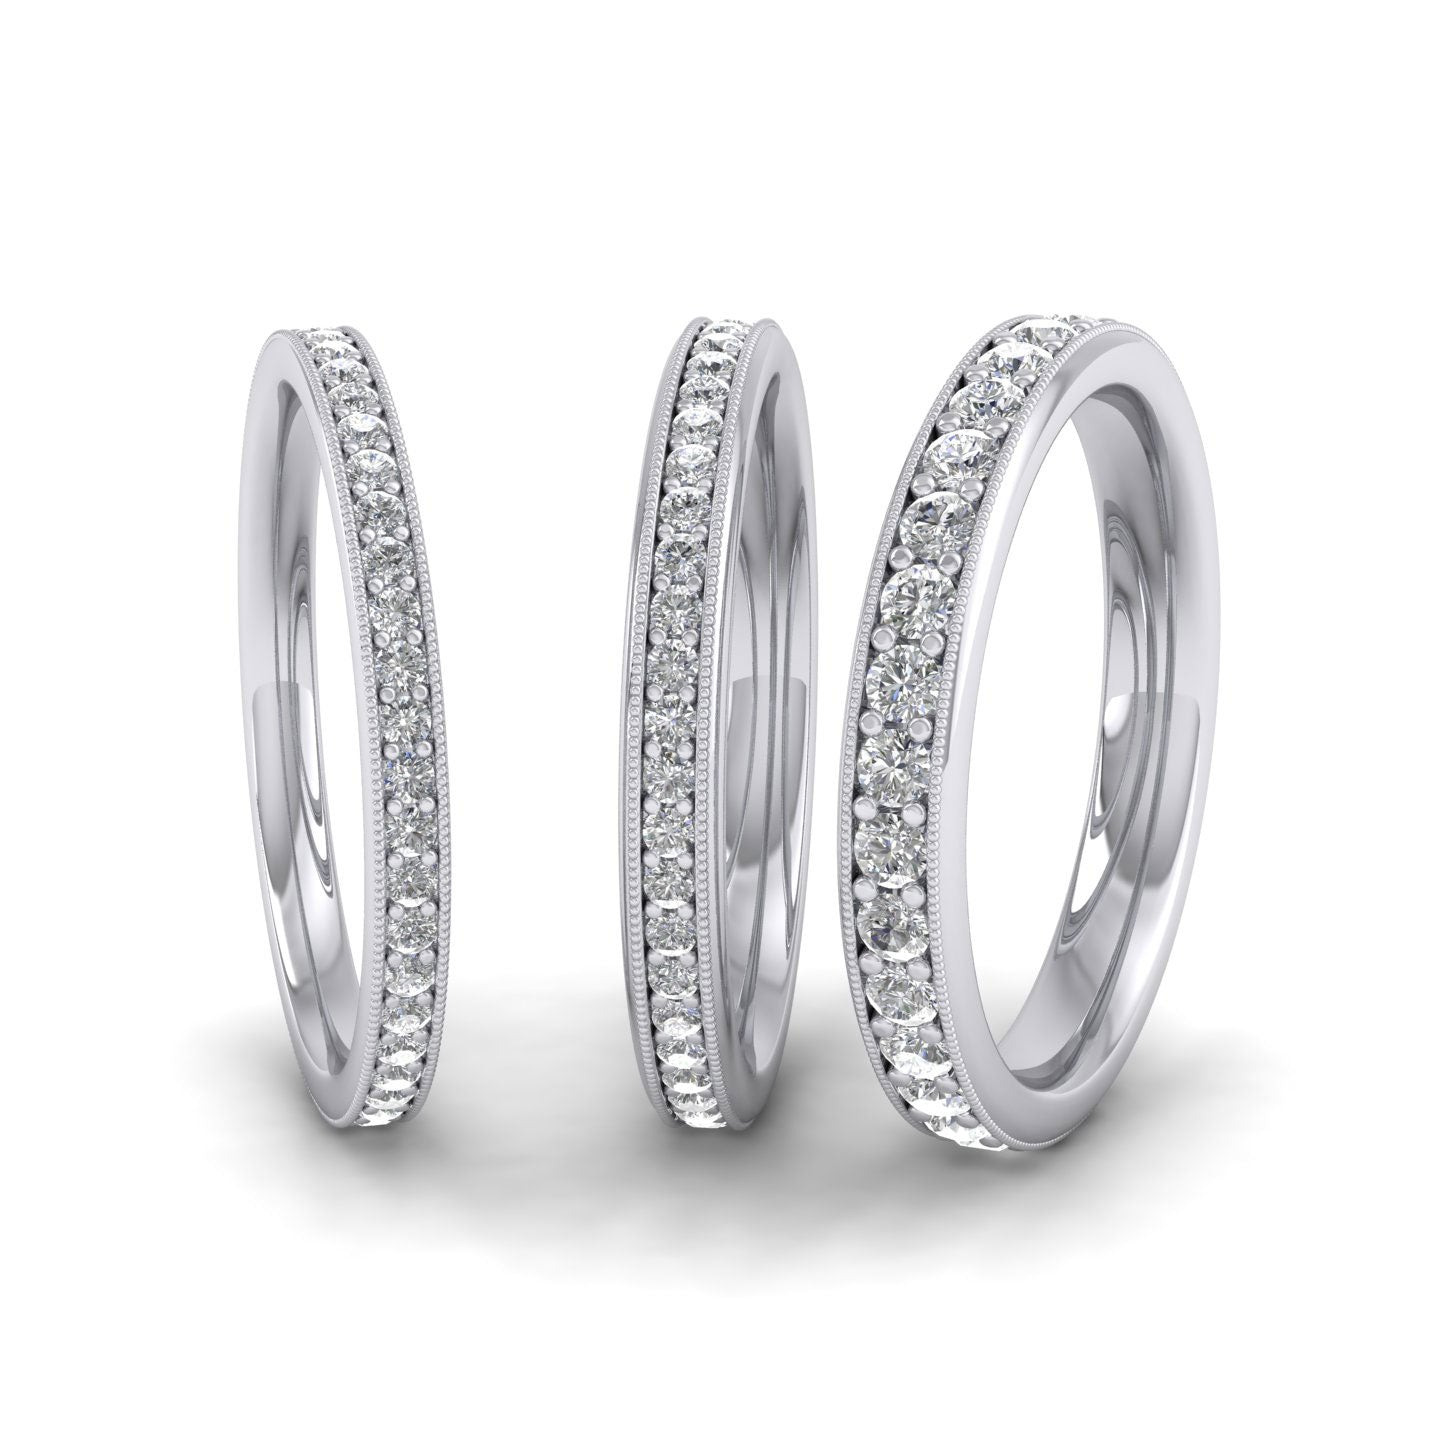 Full Bead Set 0.8ct Round Brilliant Cut Diamond With Millgrain Surround 9ct White Gold 3mm Wedding Ring